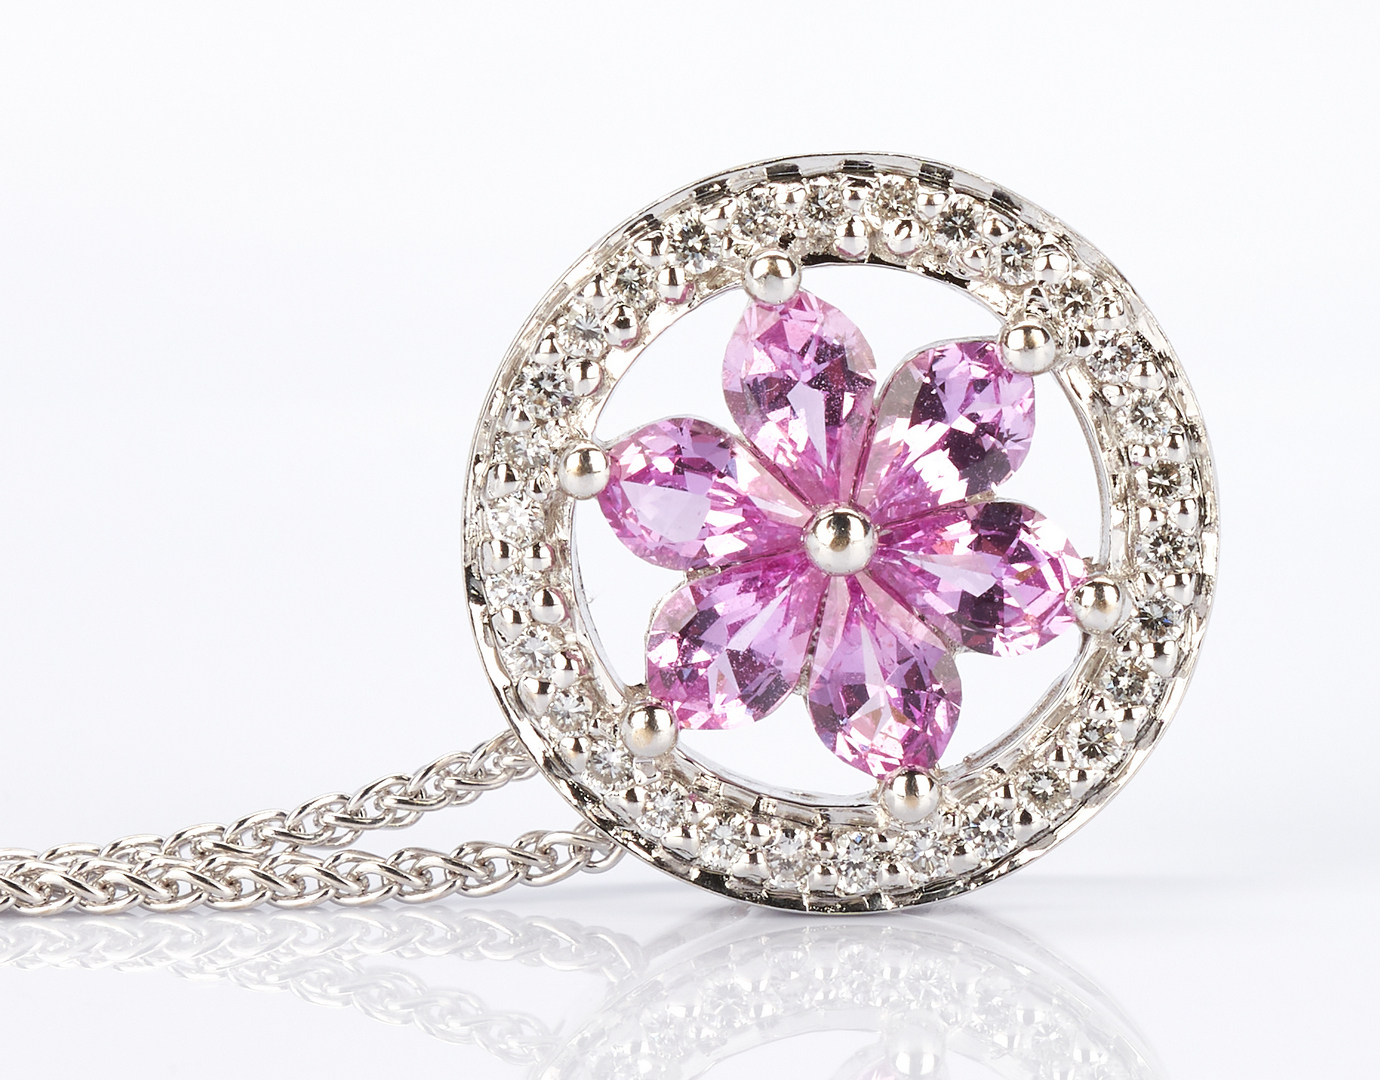 Lot 777: Ladies 18K Diamond & Pink Sapphire Pendant & 14K White Gold Necklace